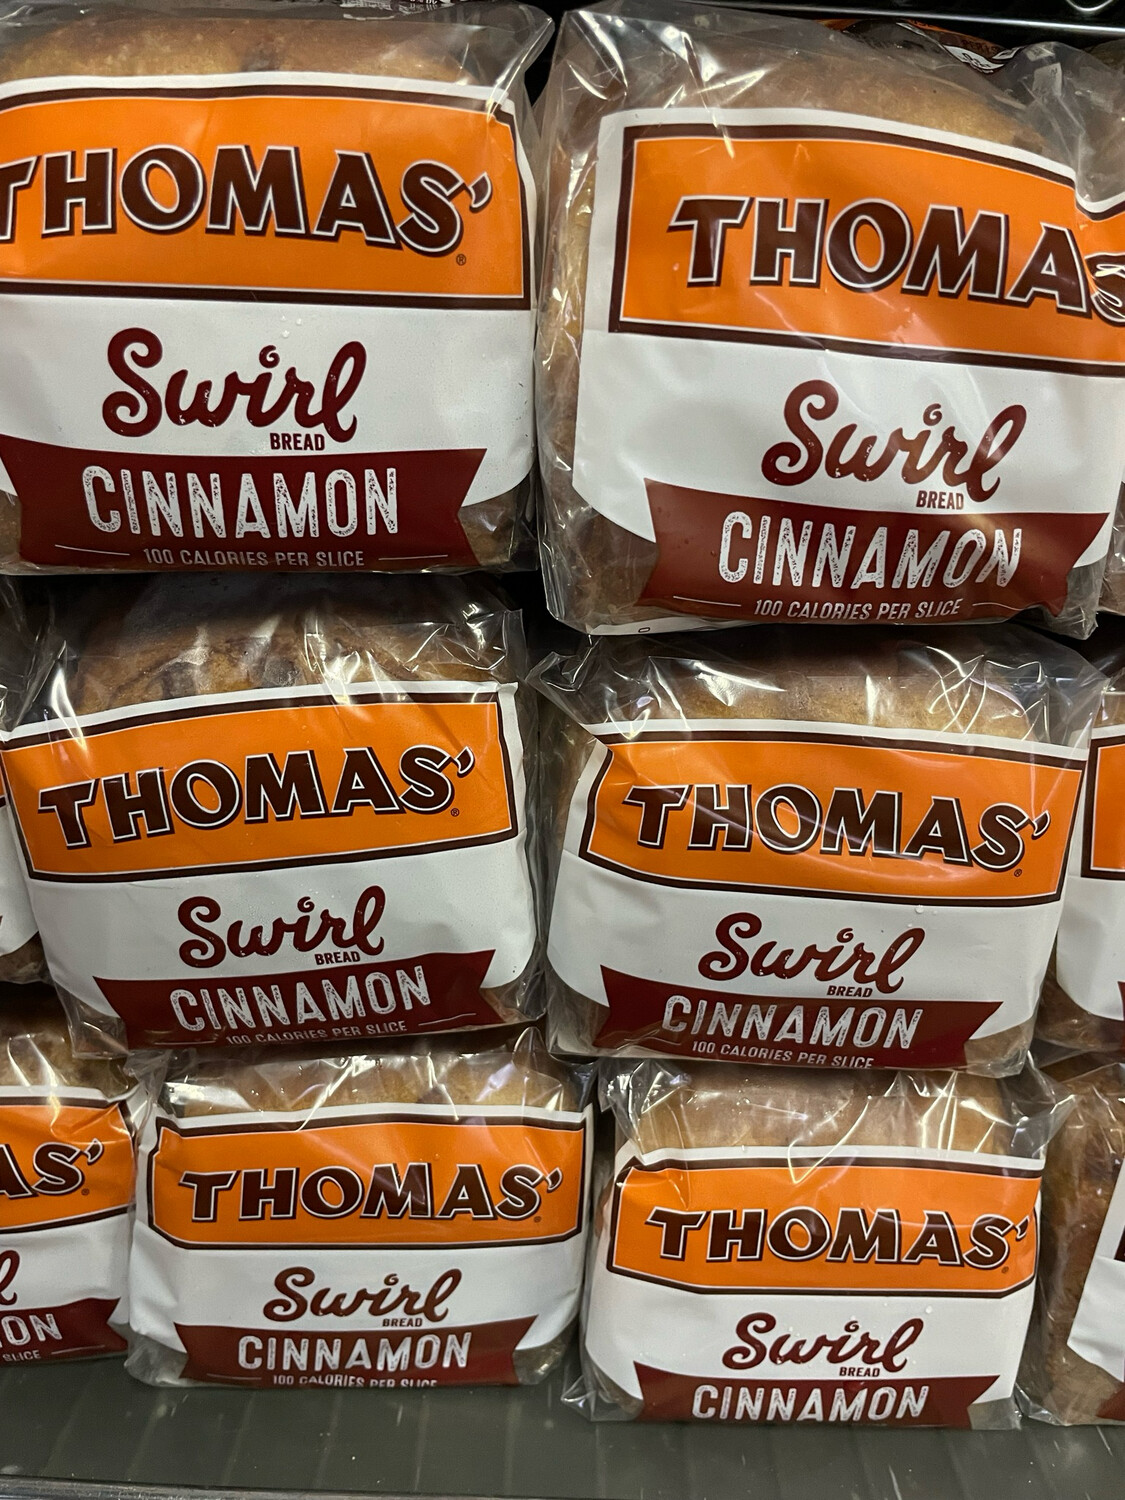 Cinnamon Swirl Bread
(*LIMIT 1 per household*)